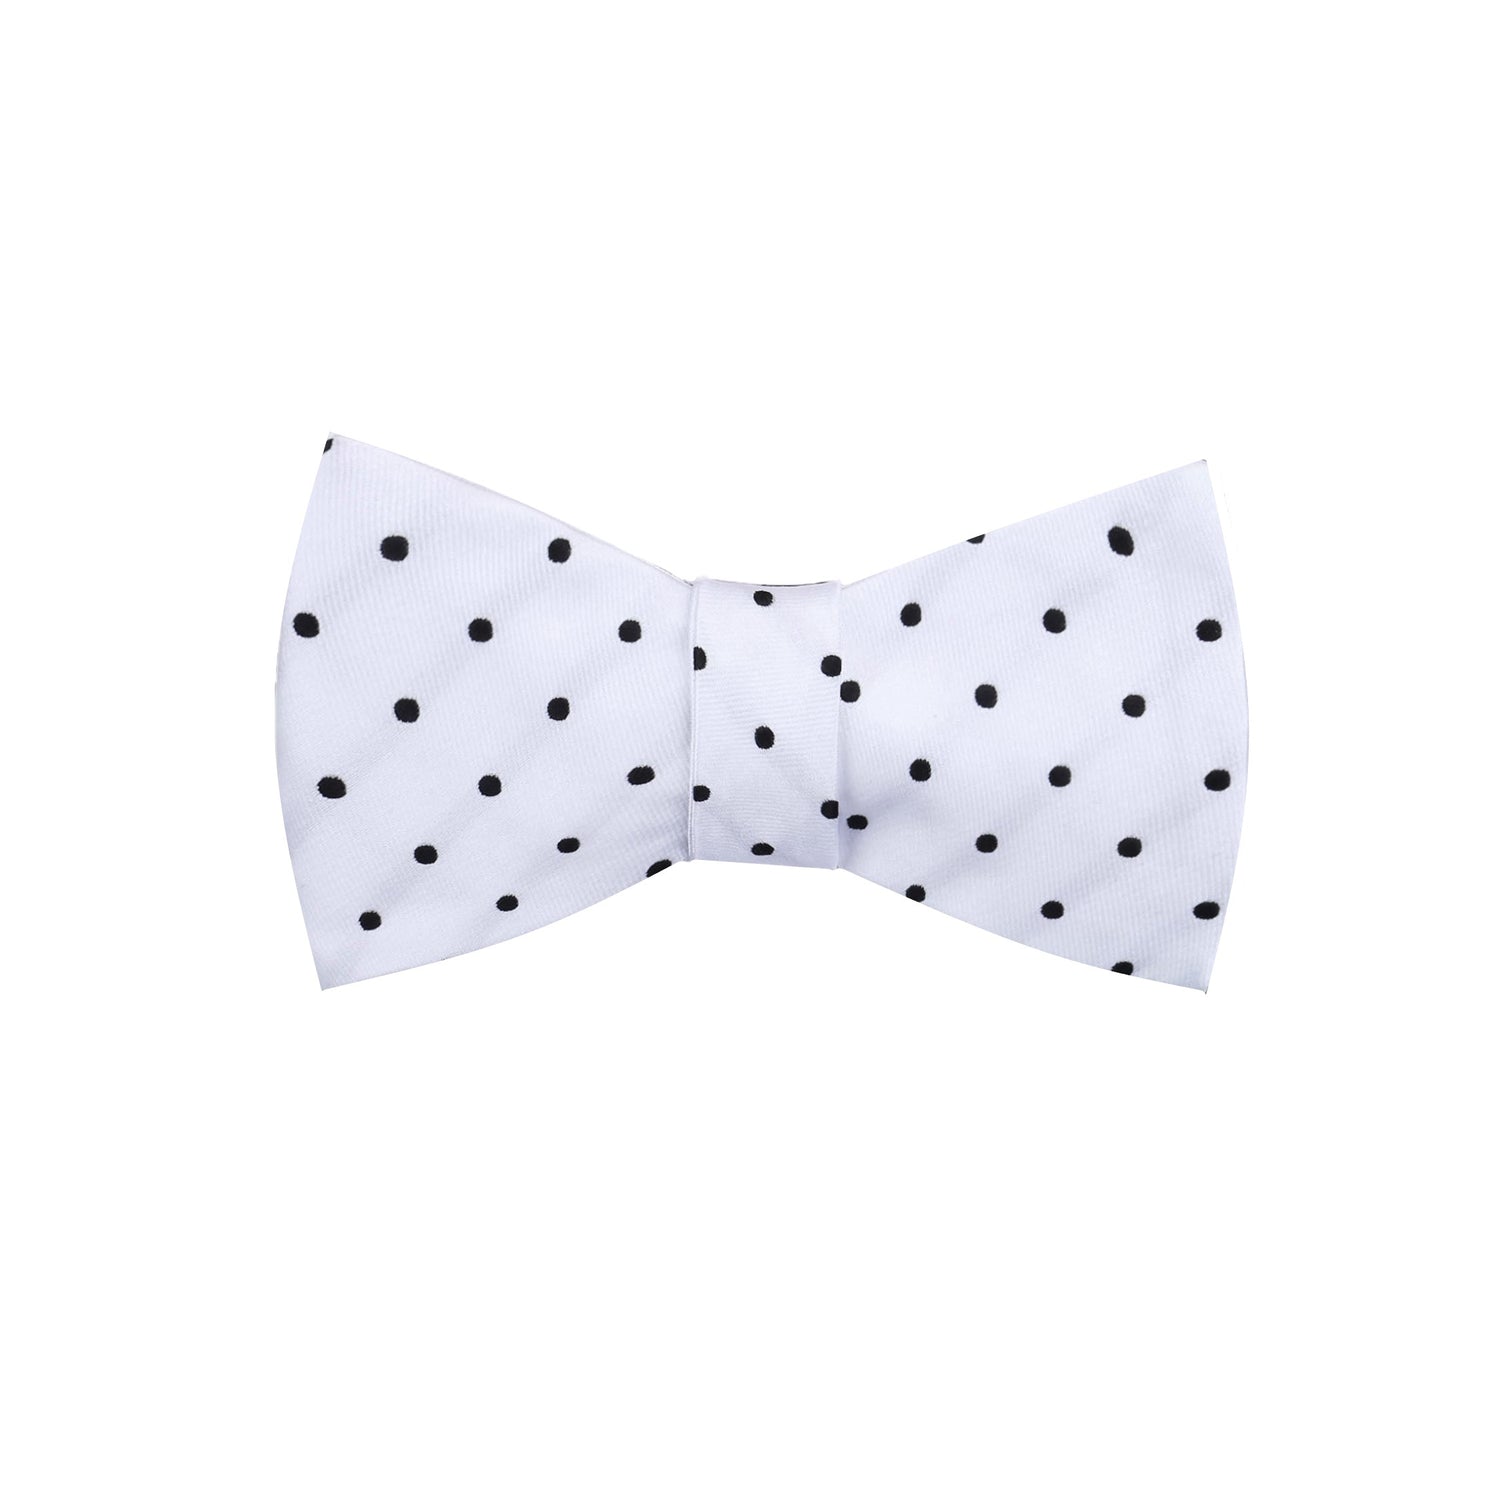 White with medium black dots bow tie